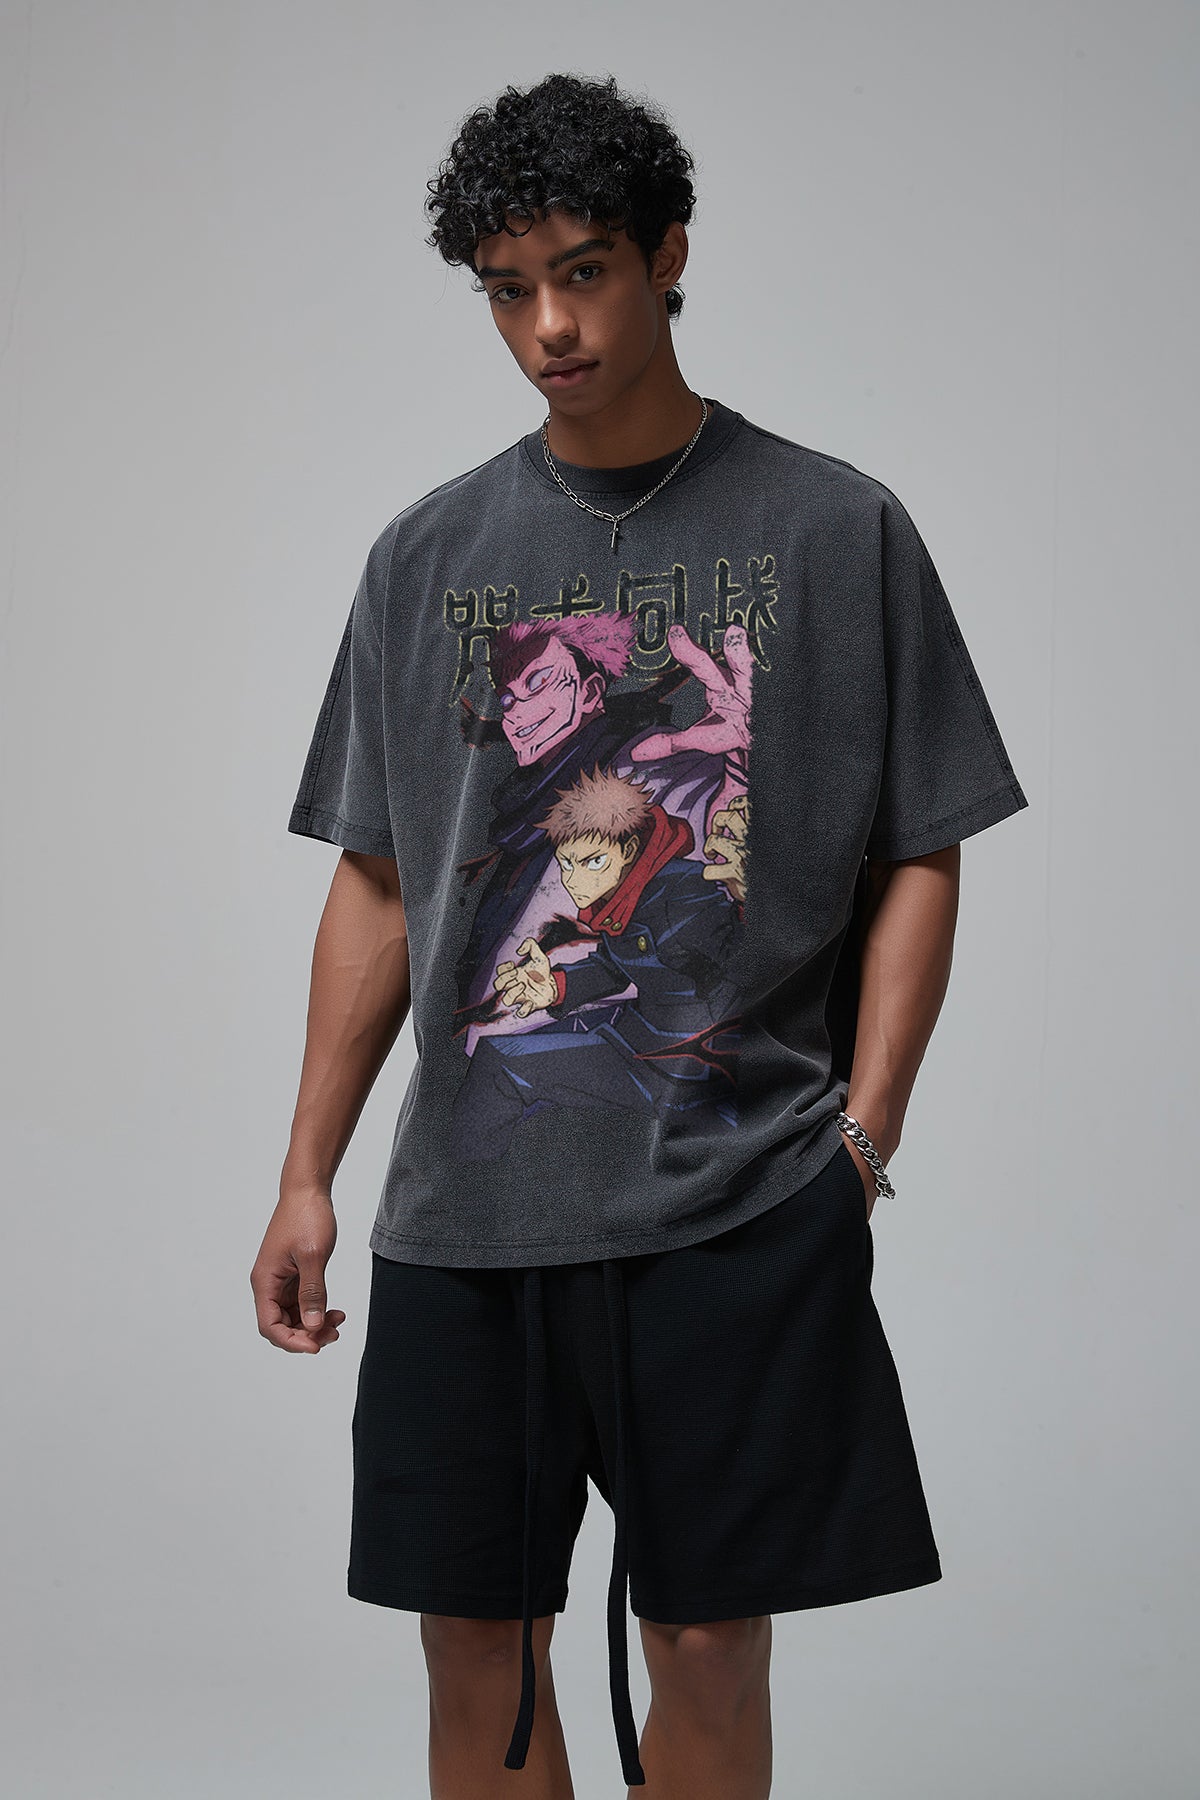 "JJK Graphic" Anime Gym T Shirt - Santo 